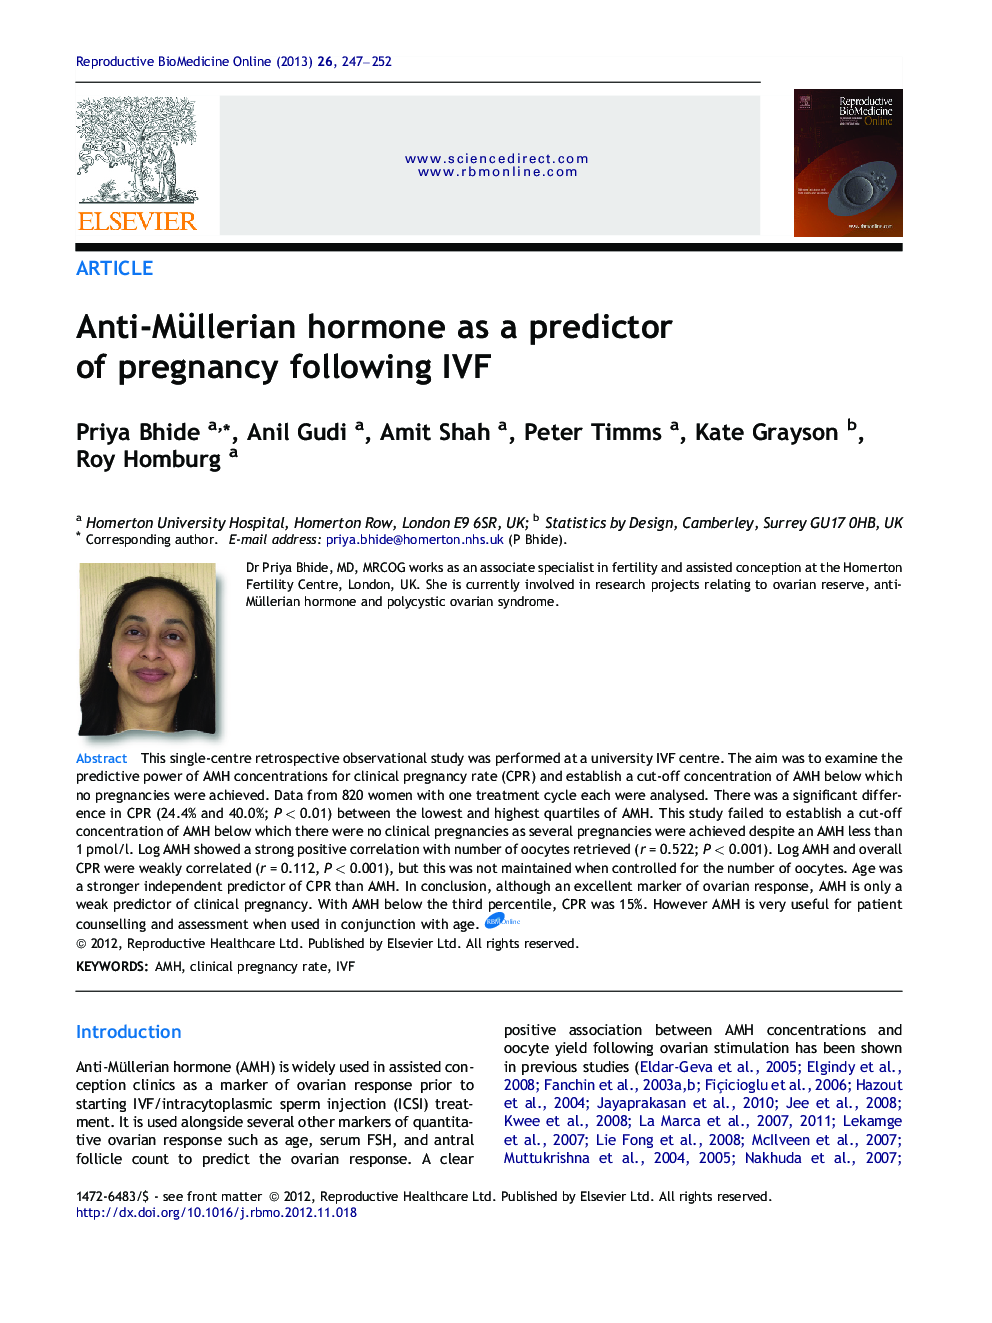 Anti-Müllerian hormone as a predictor of pregnancy following IVF 